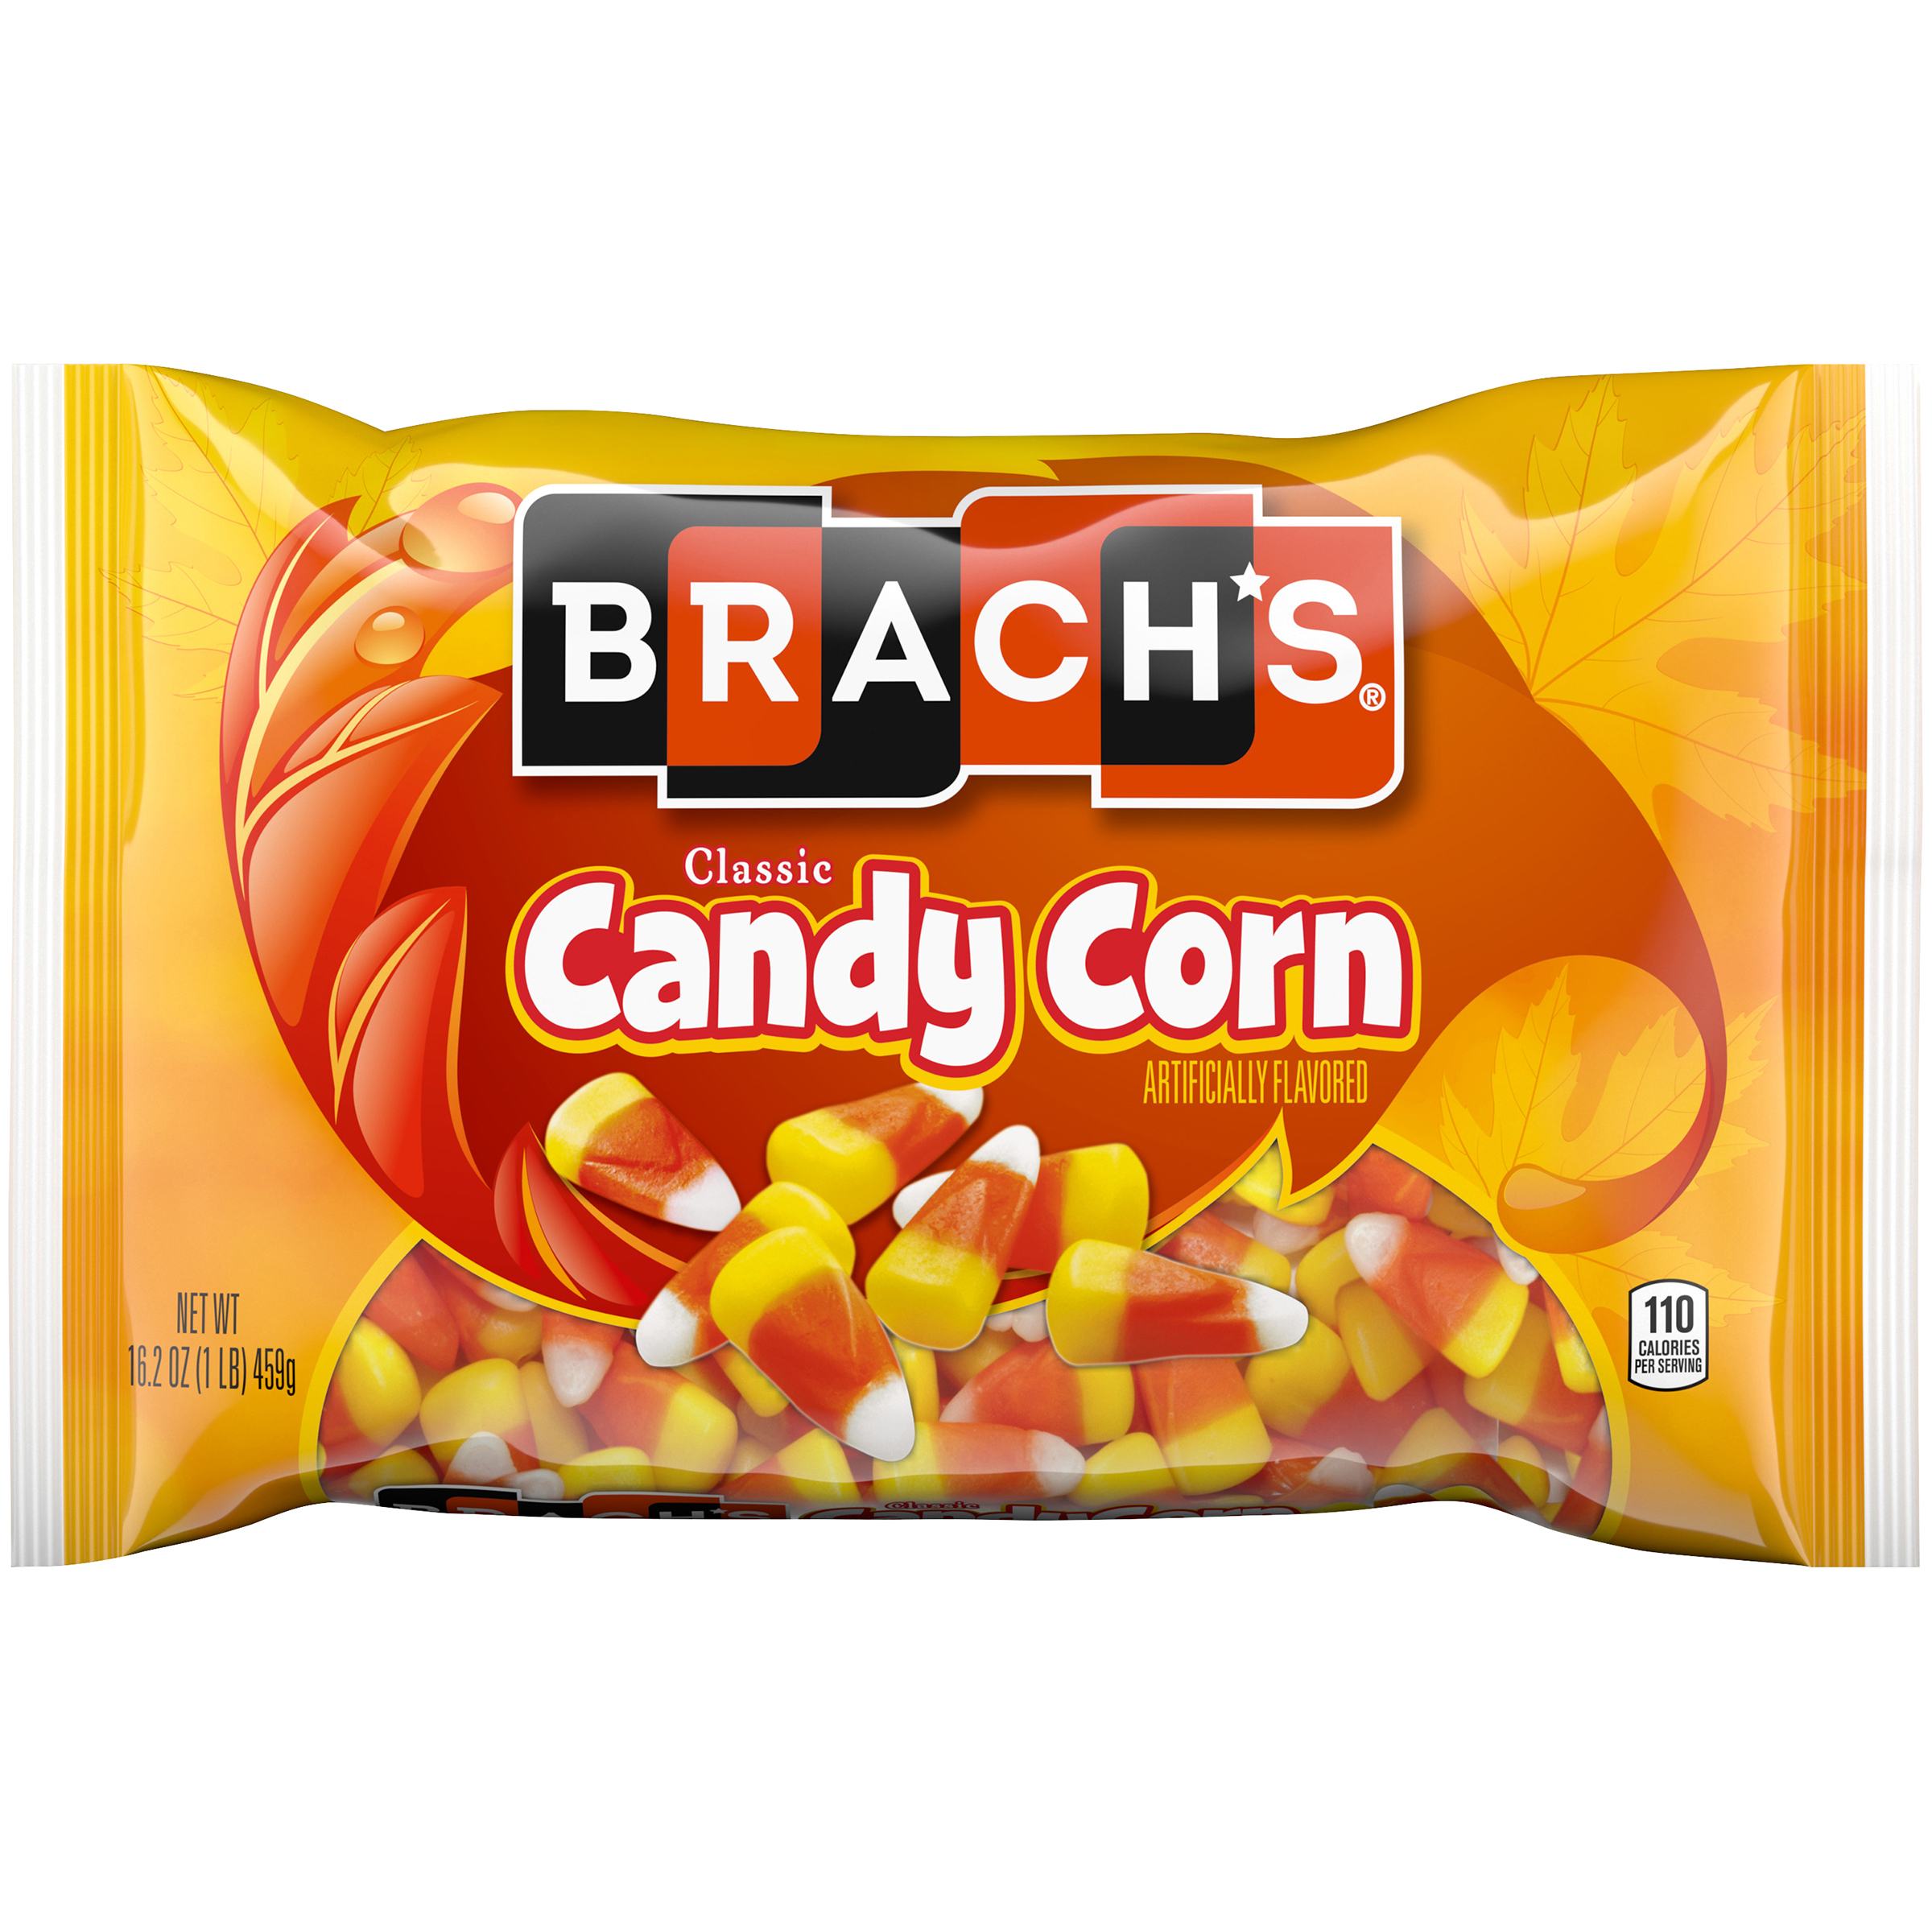 Brach's Halloween Classic Candy Corn Bag, 16.2 oz - image 1 of 11